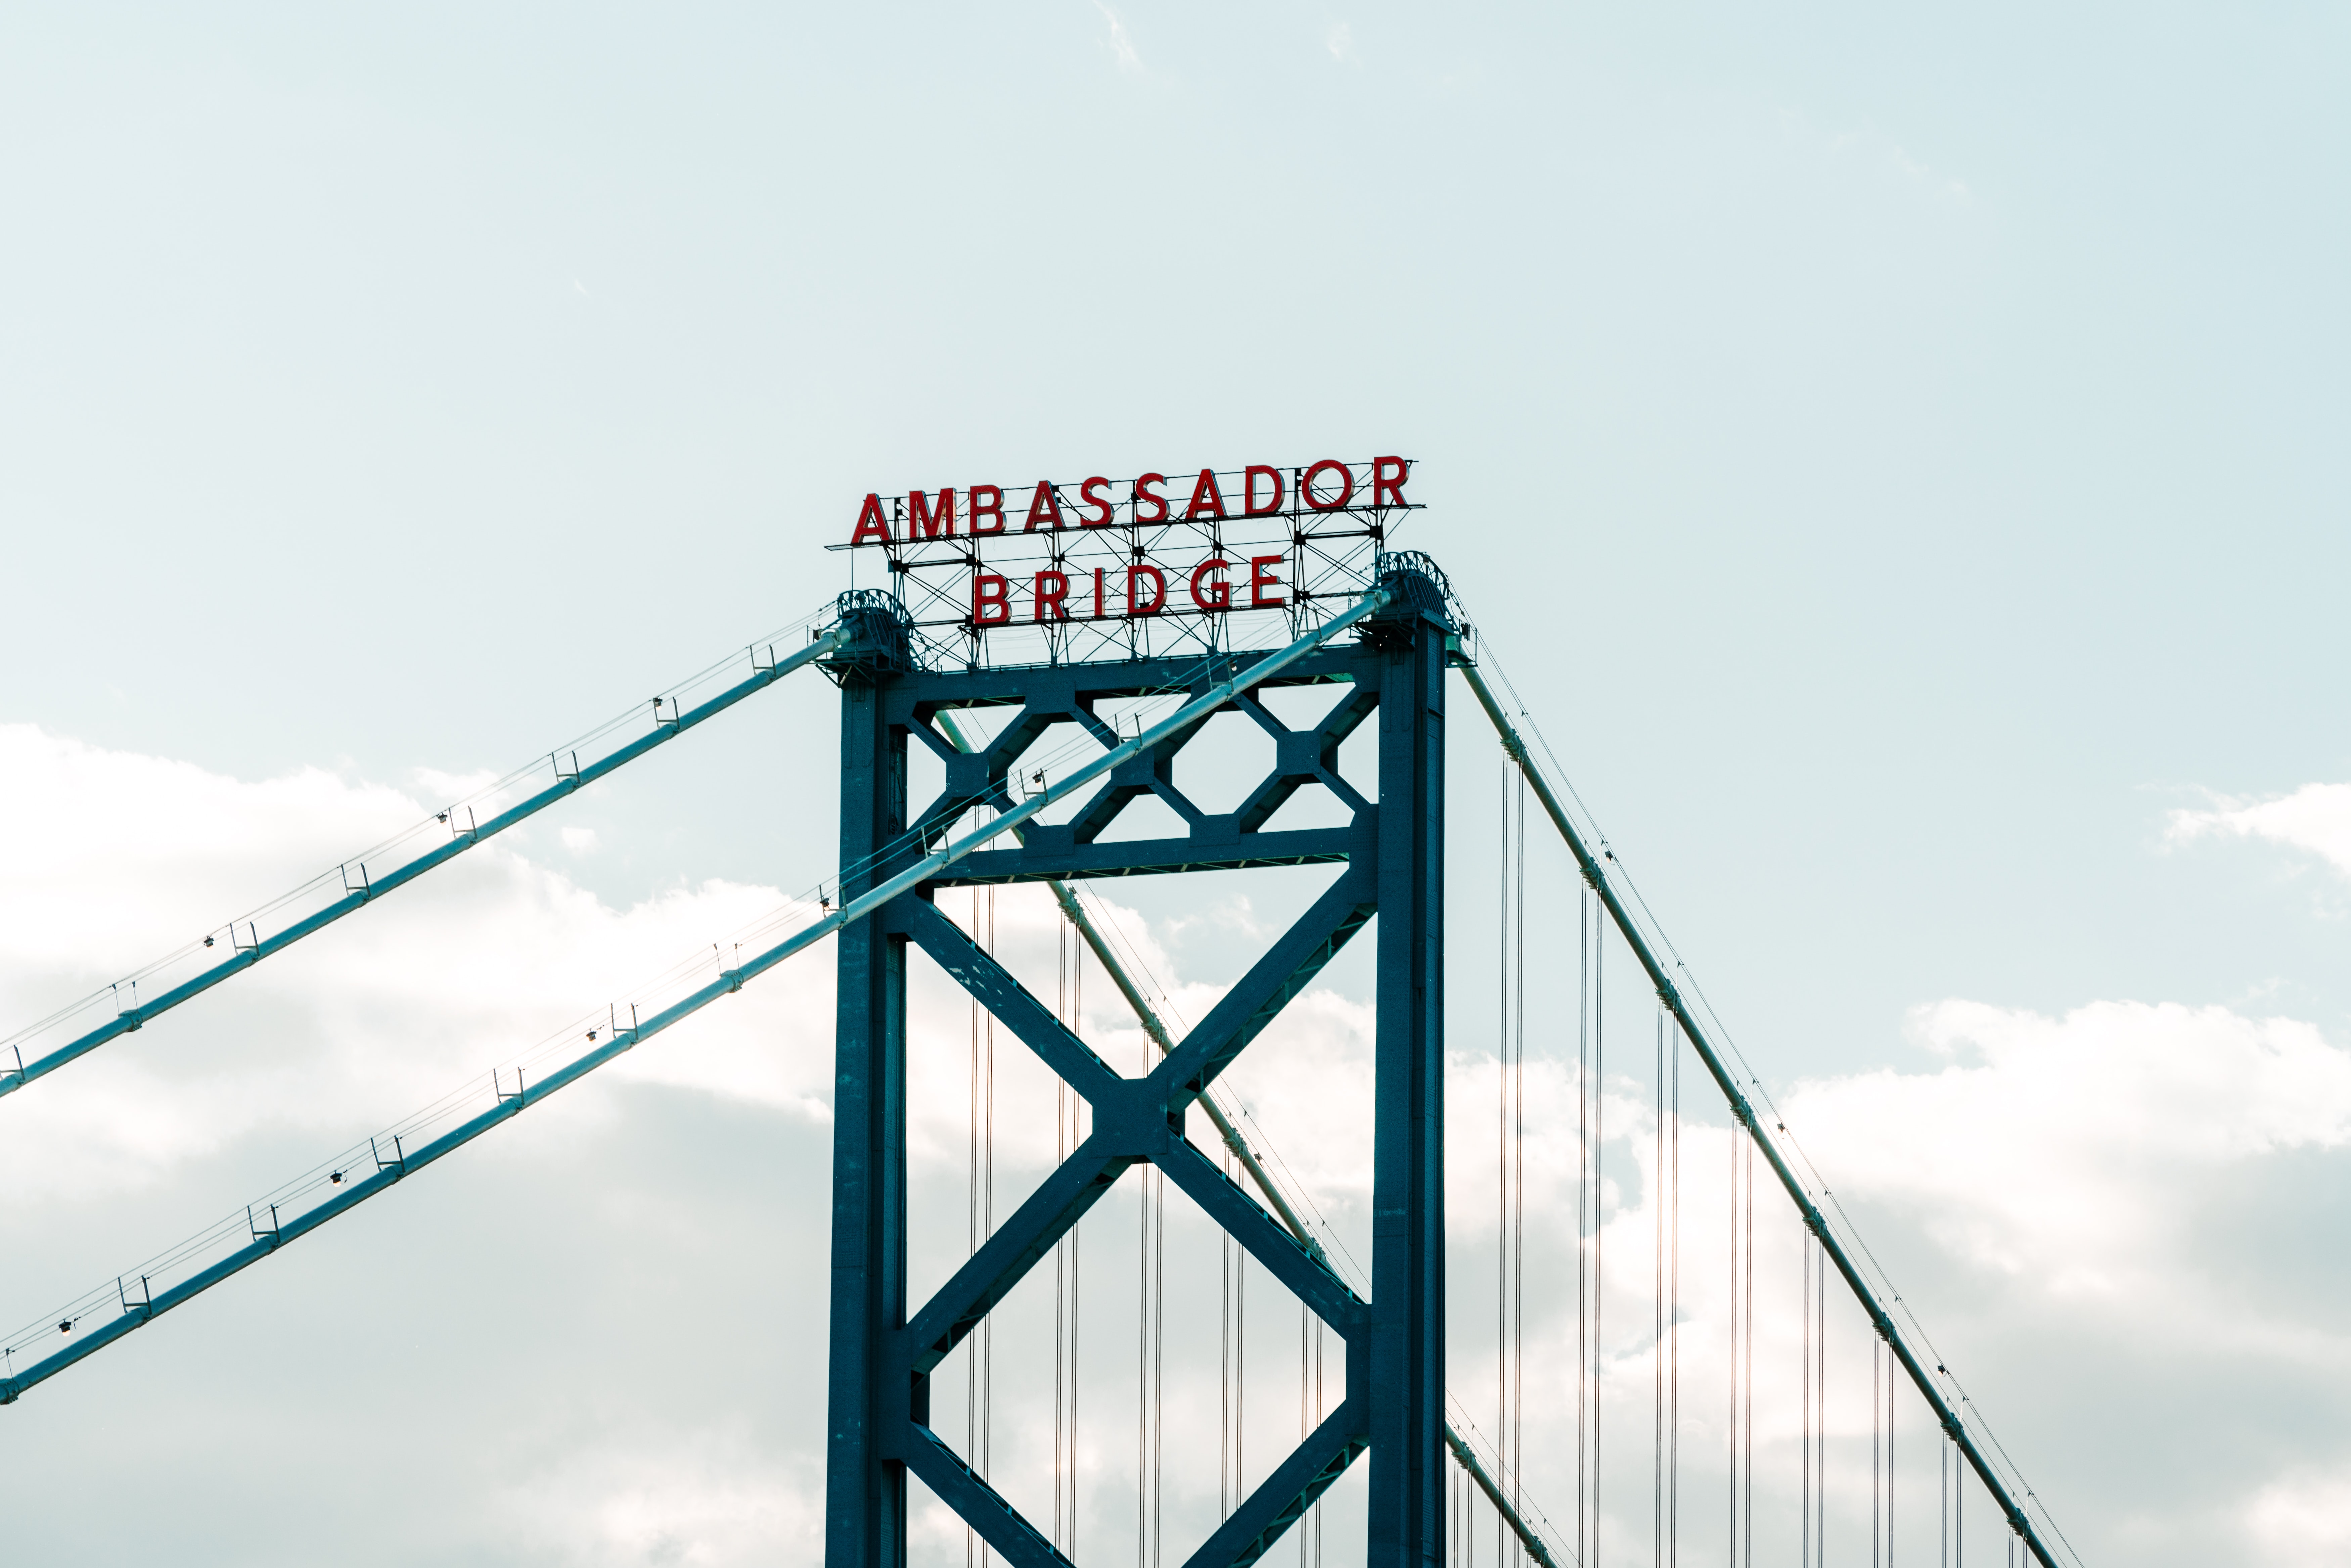 Ambassador Bridge; image by Hermes Rivera, via Unsplash.com.